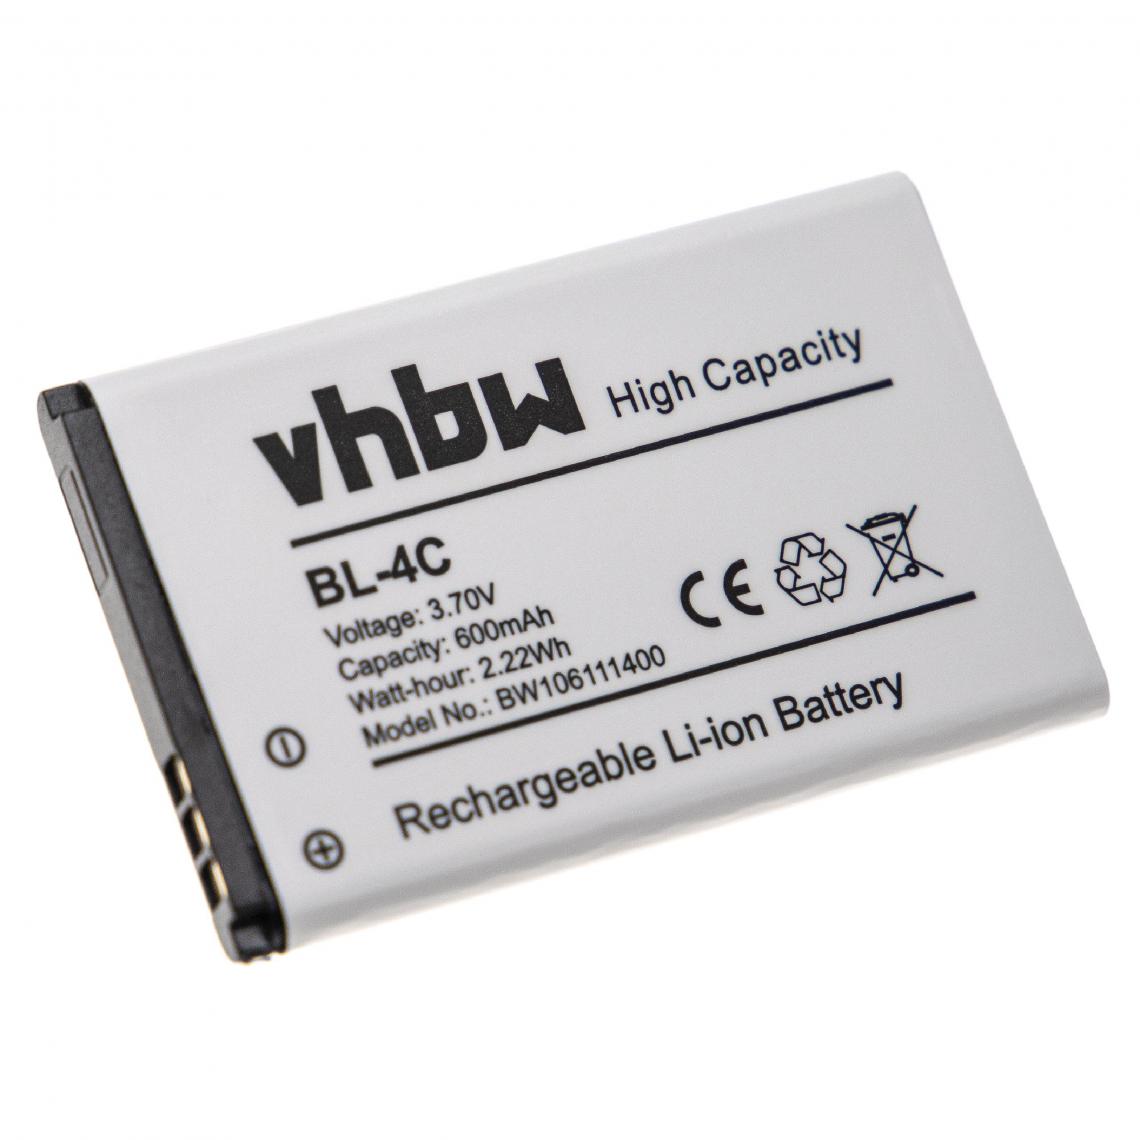 Vhbw - vhbw Batterie compatible avec Bea-fon C150, C240, SL360 smartphone (600mAh, 3,7V, Li-ion) - Batterie téléphone